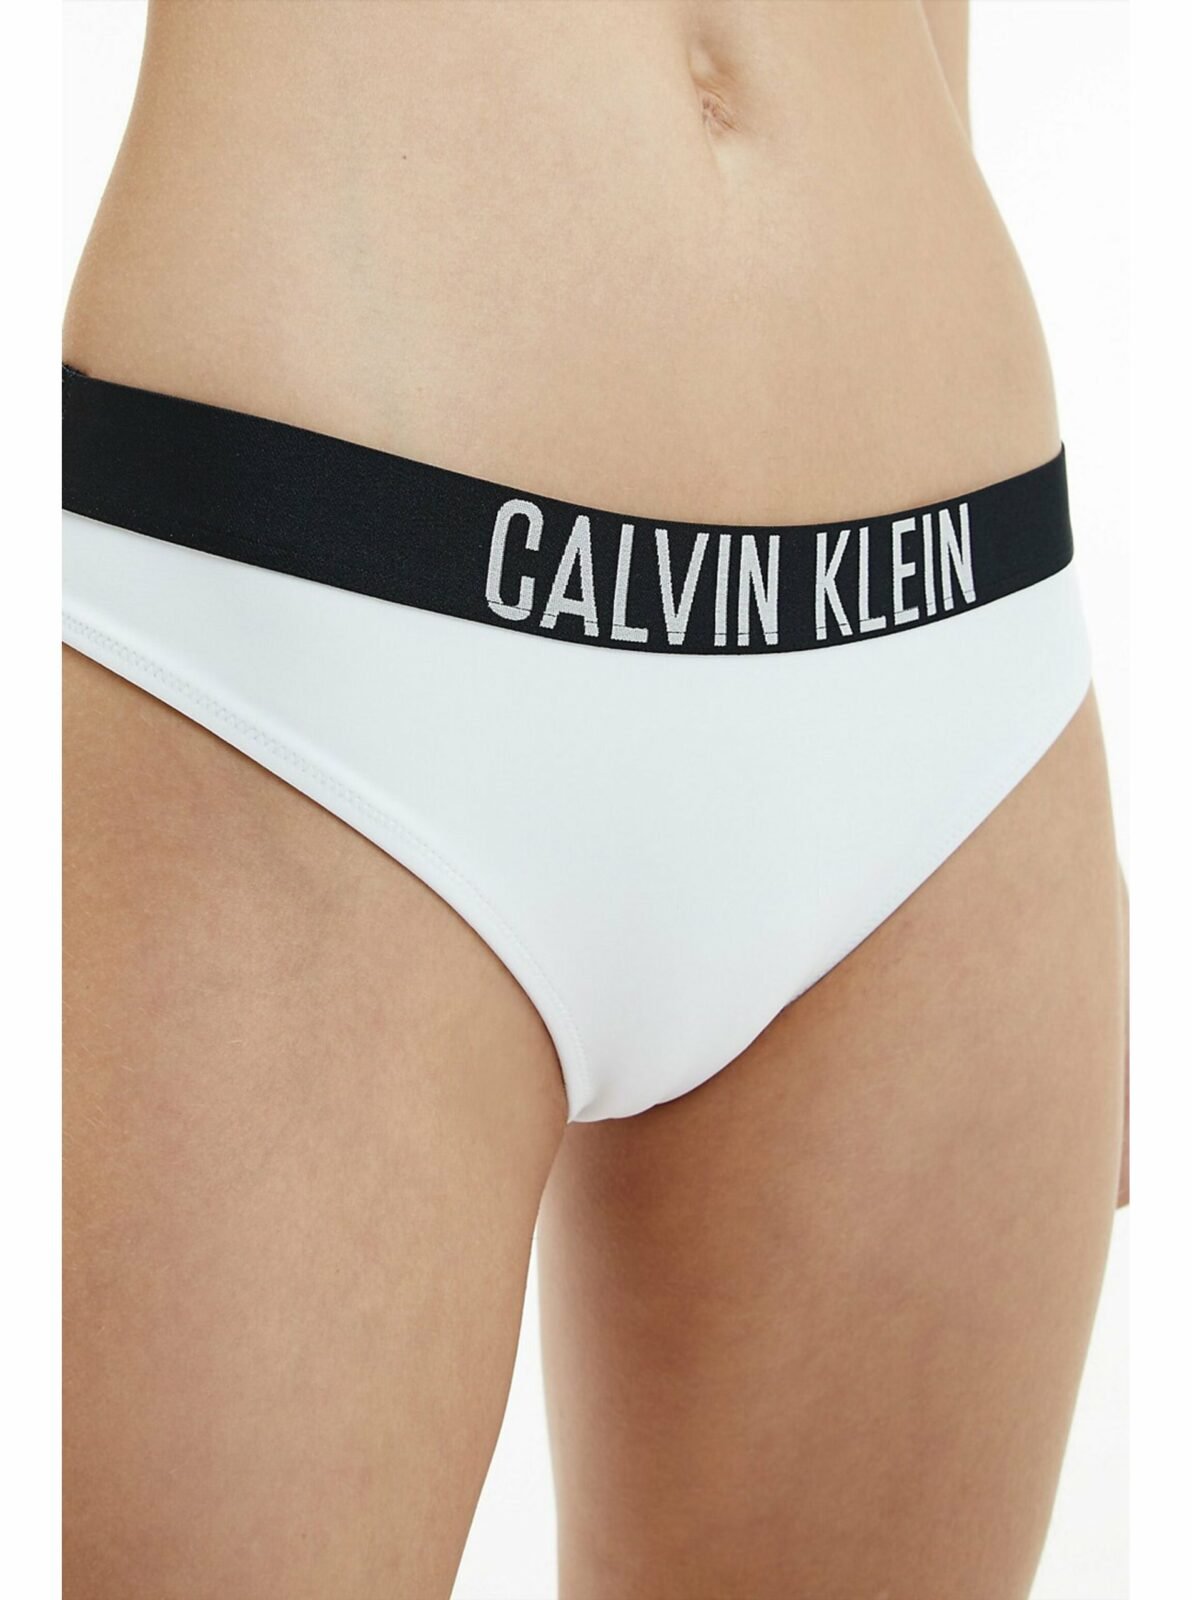 Bílý spodní díl plavek Classic Bikini Calvin